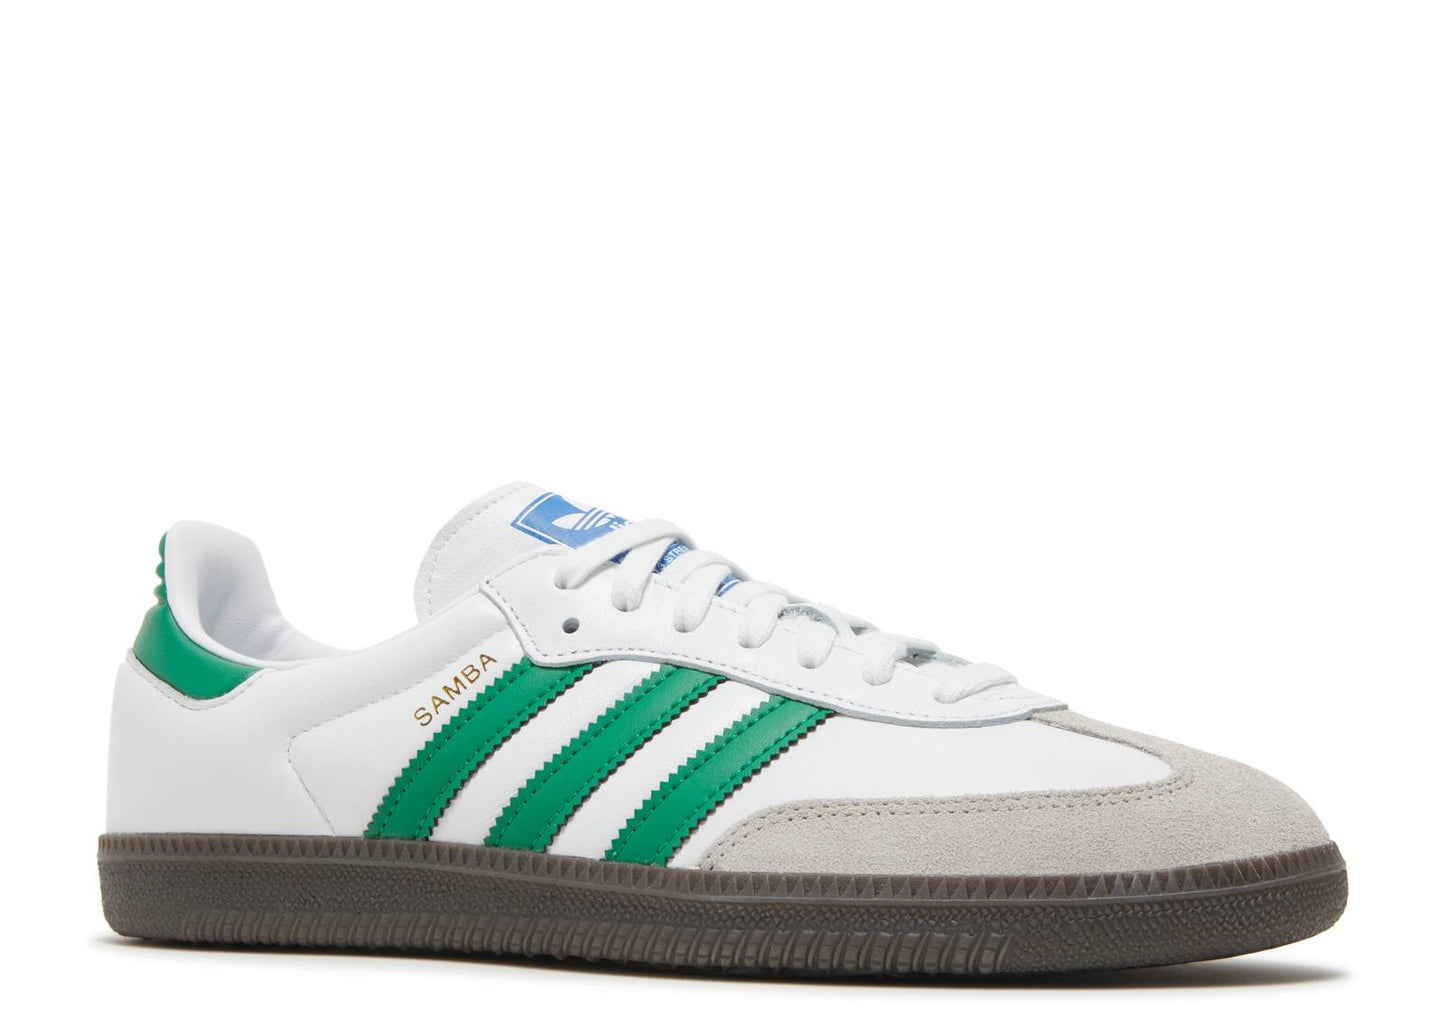 Adidas Samba OG "White/Green"